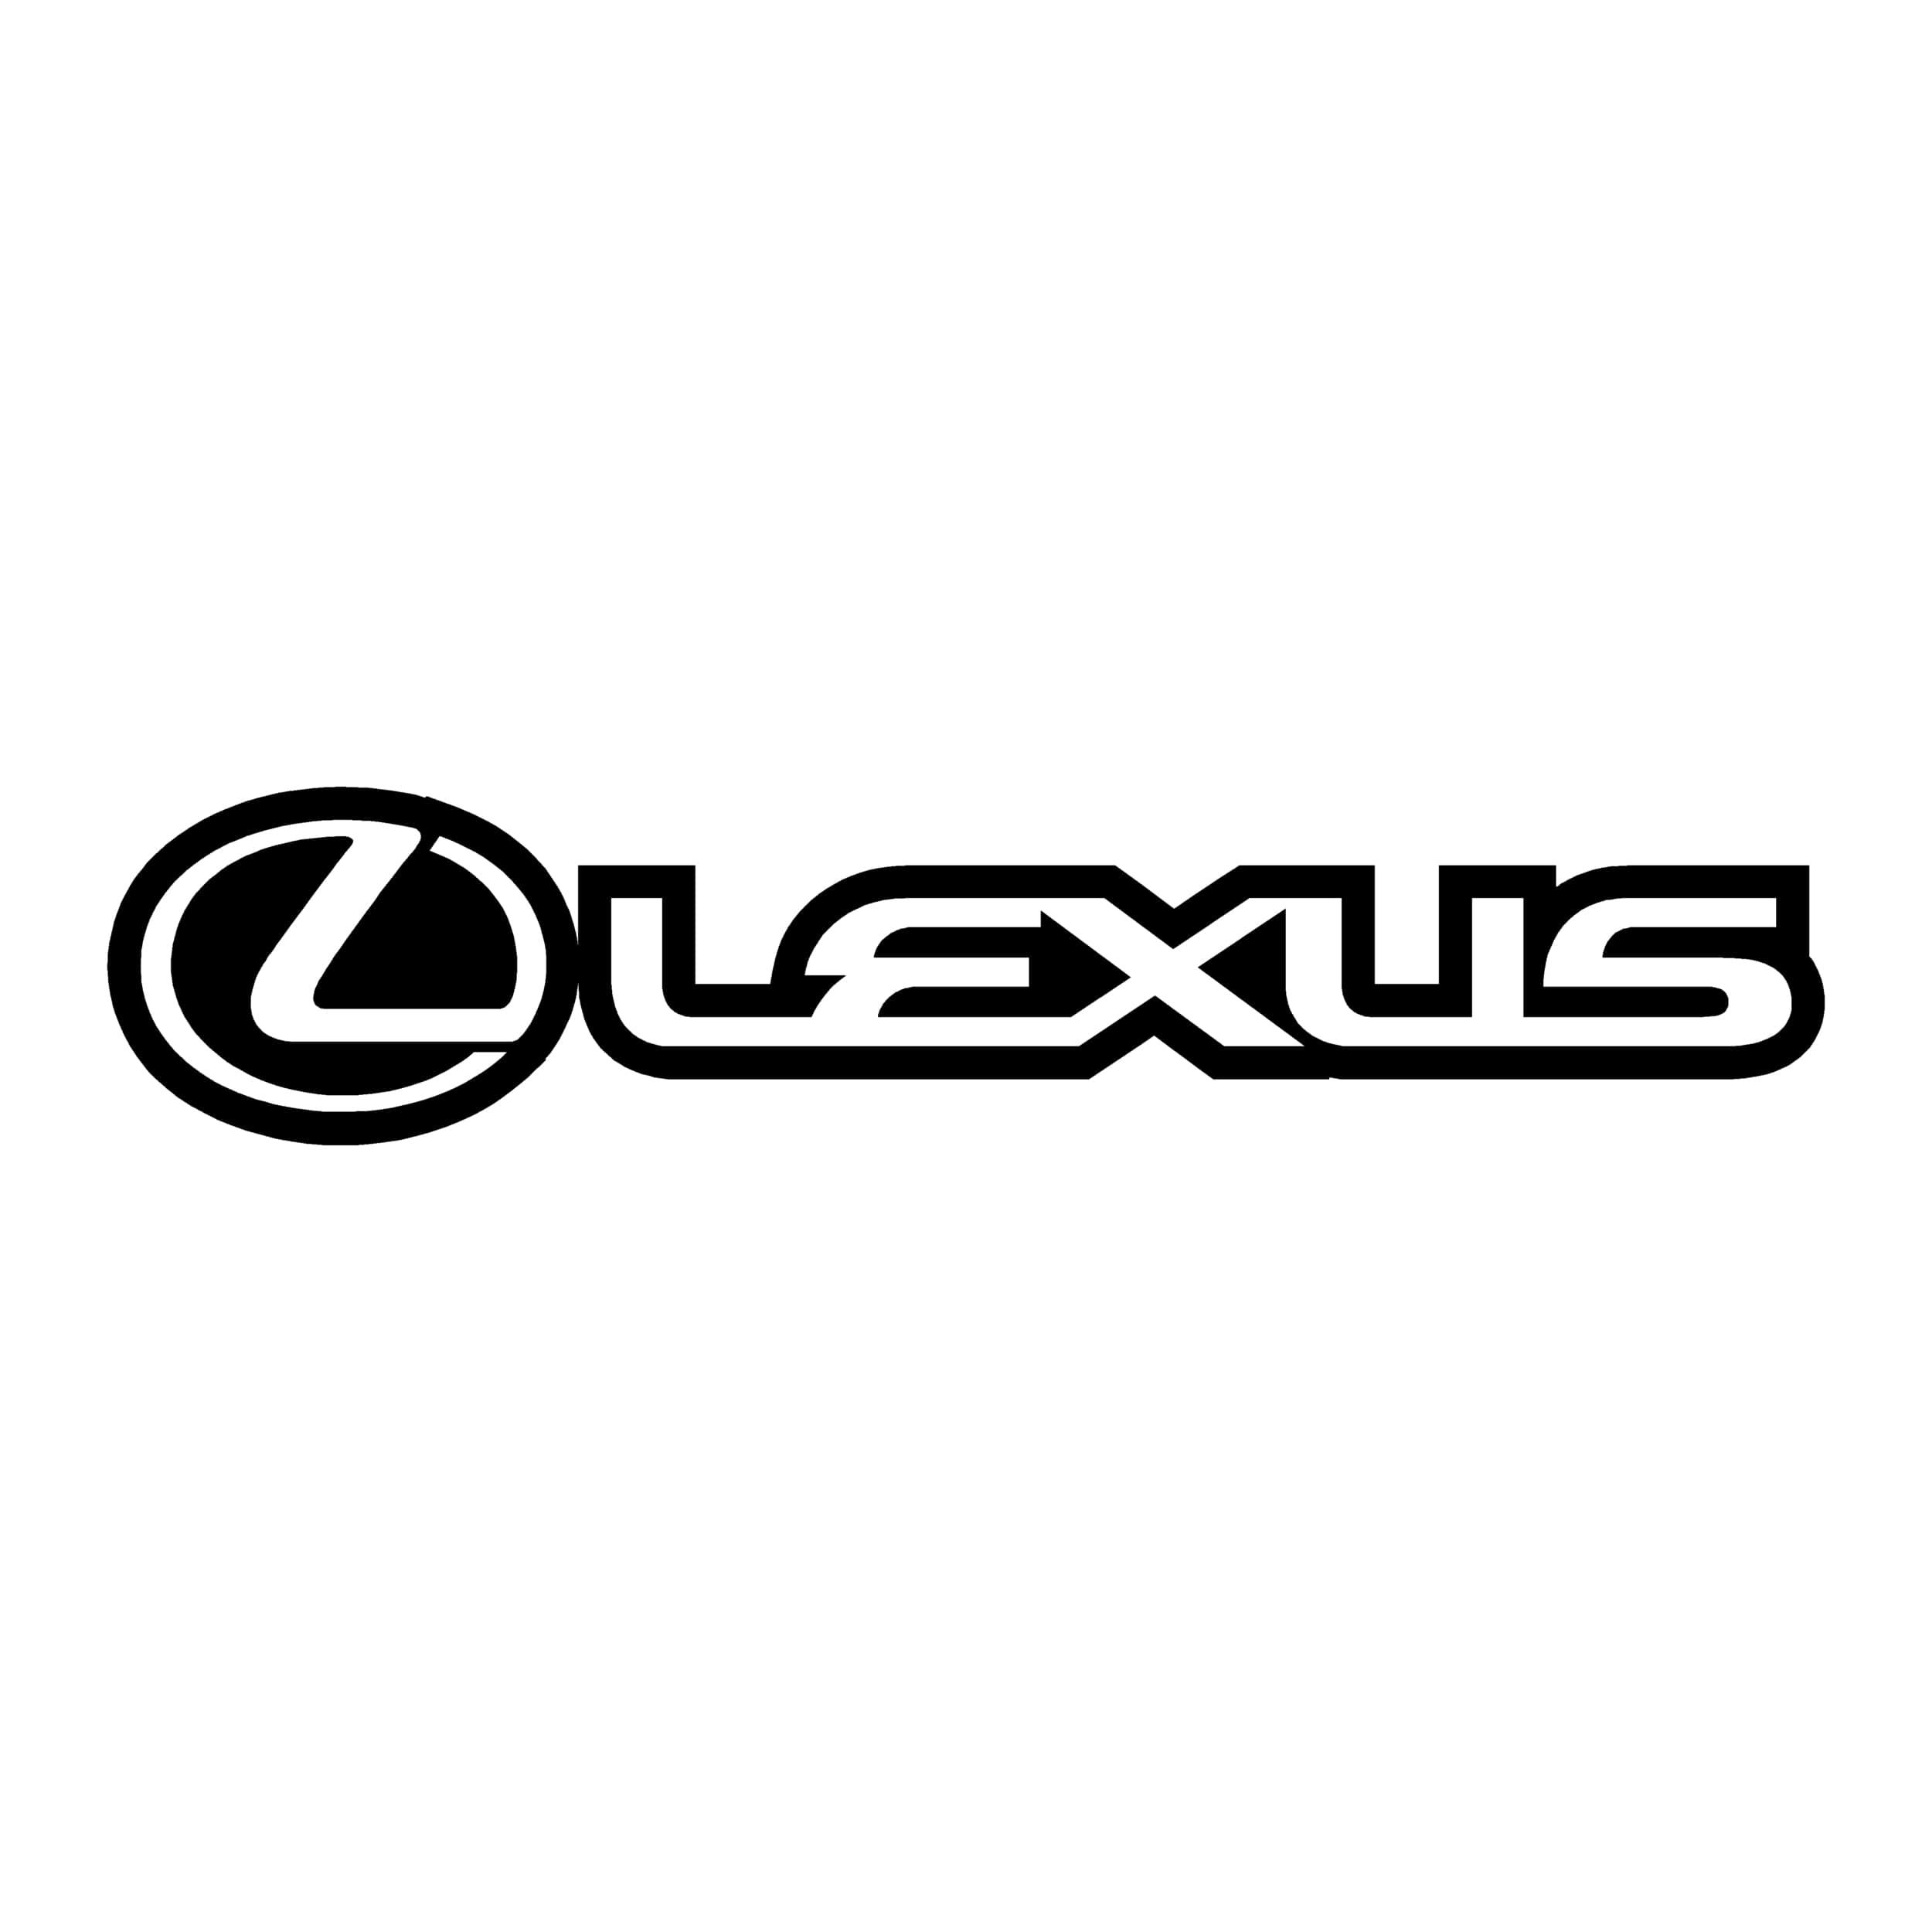 stickers-lexus-ref-2-auto-tuning-amortisseur-4x4-tout-terrain-auto-camion-competition-rallye-autocollant-min